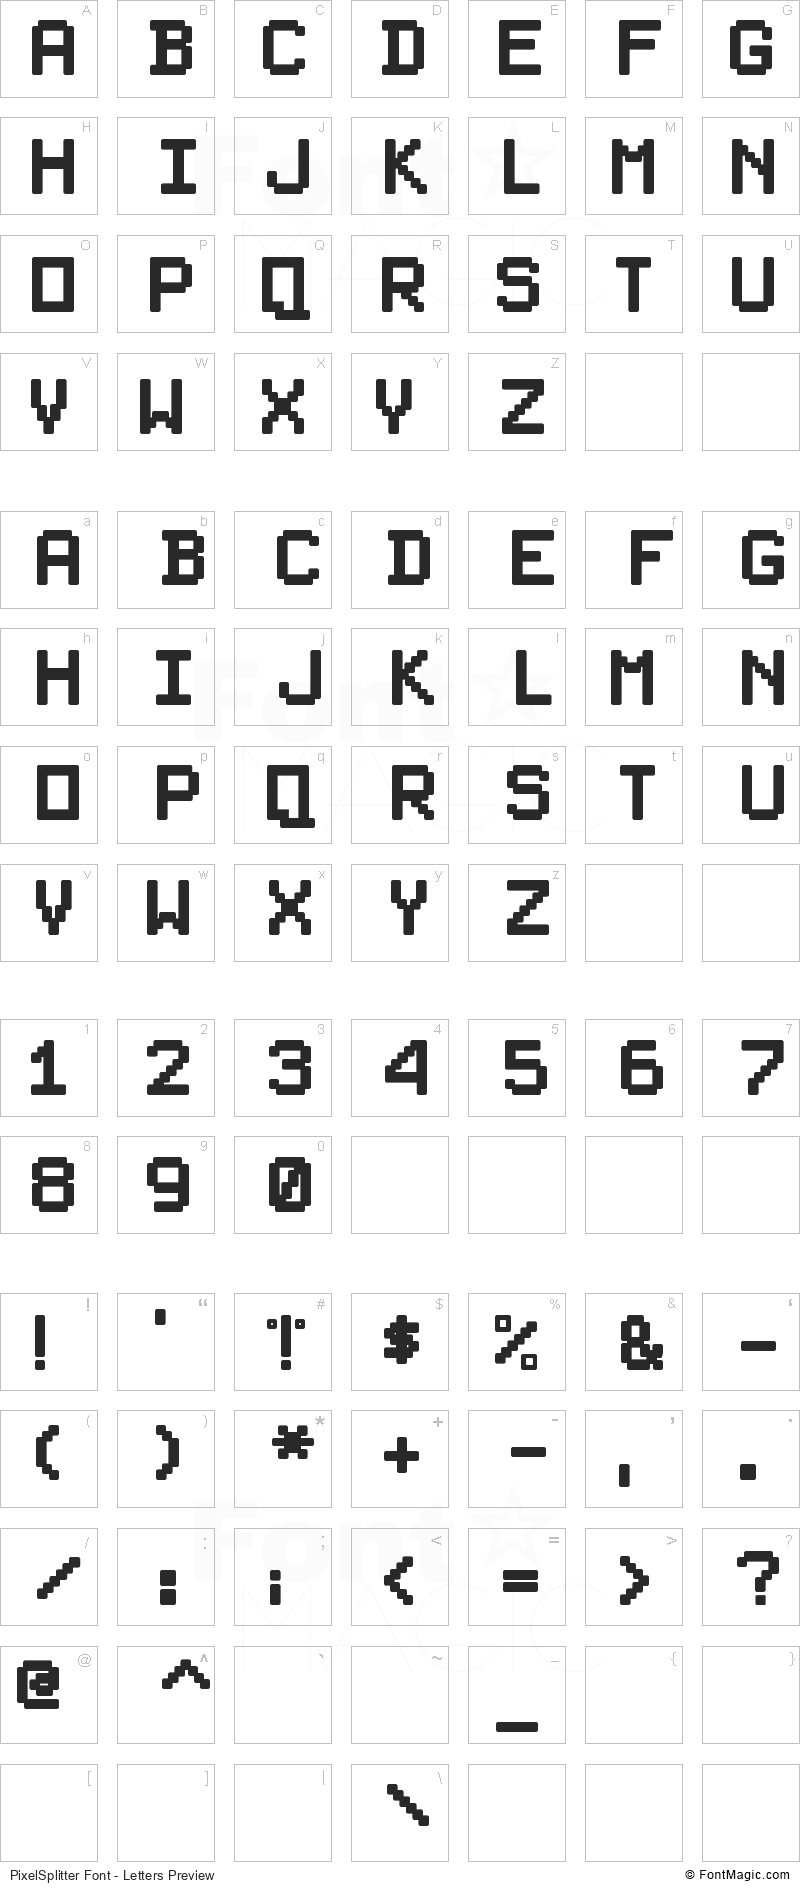 PixelSplitter Font - All Latters Preview Chart